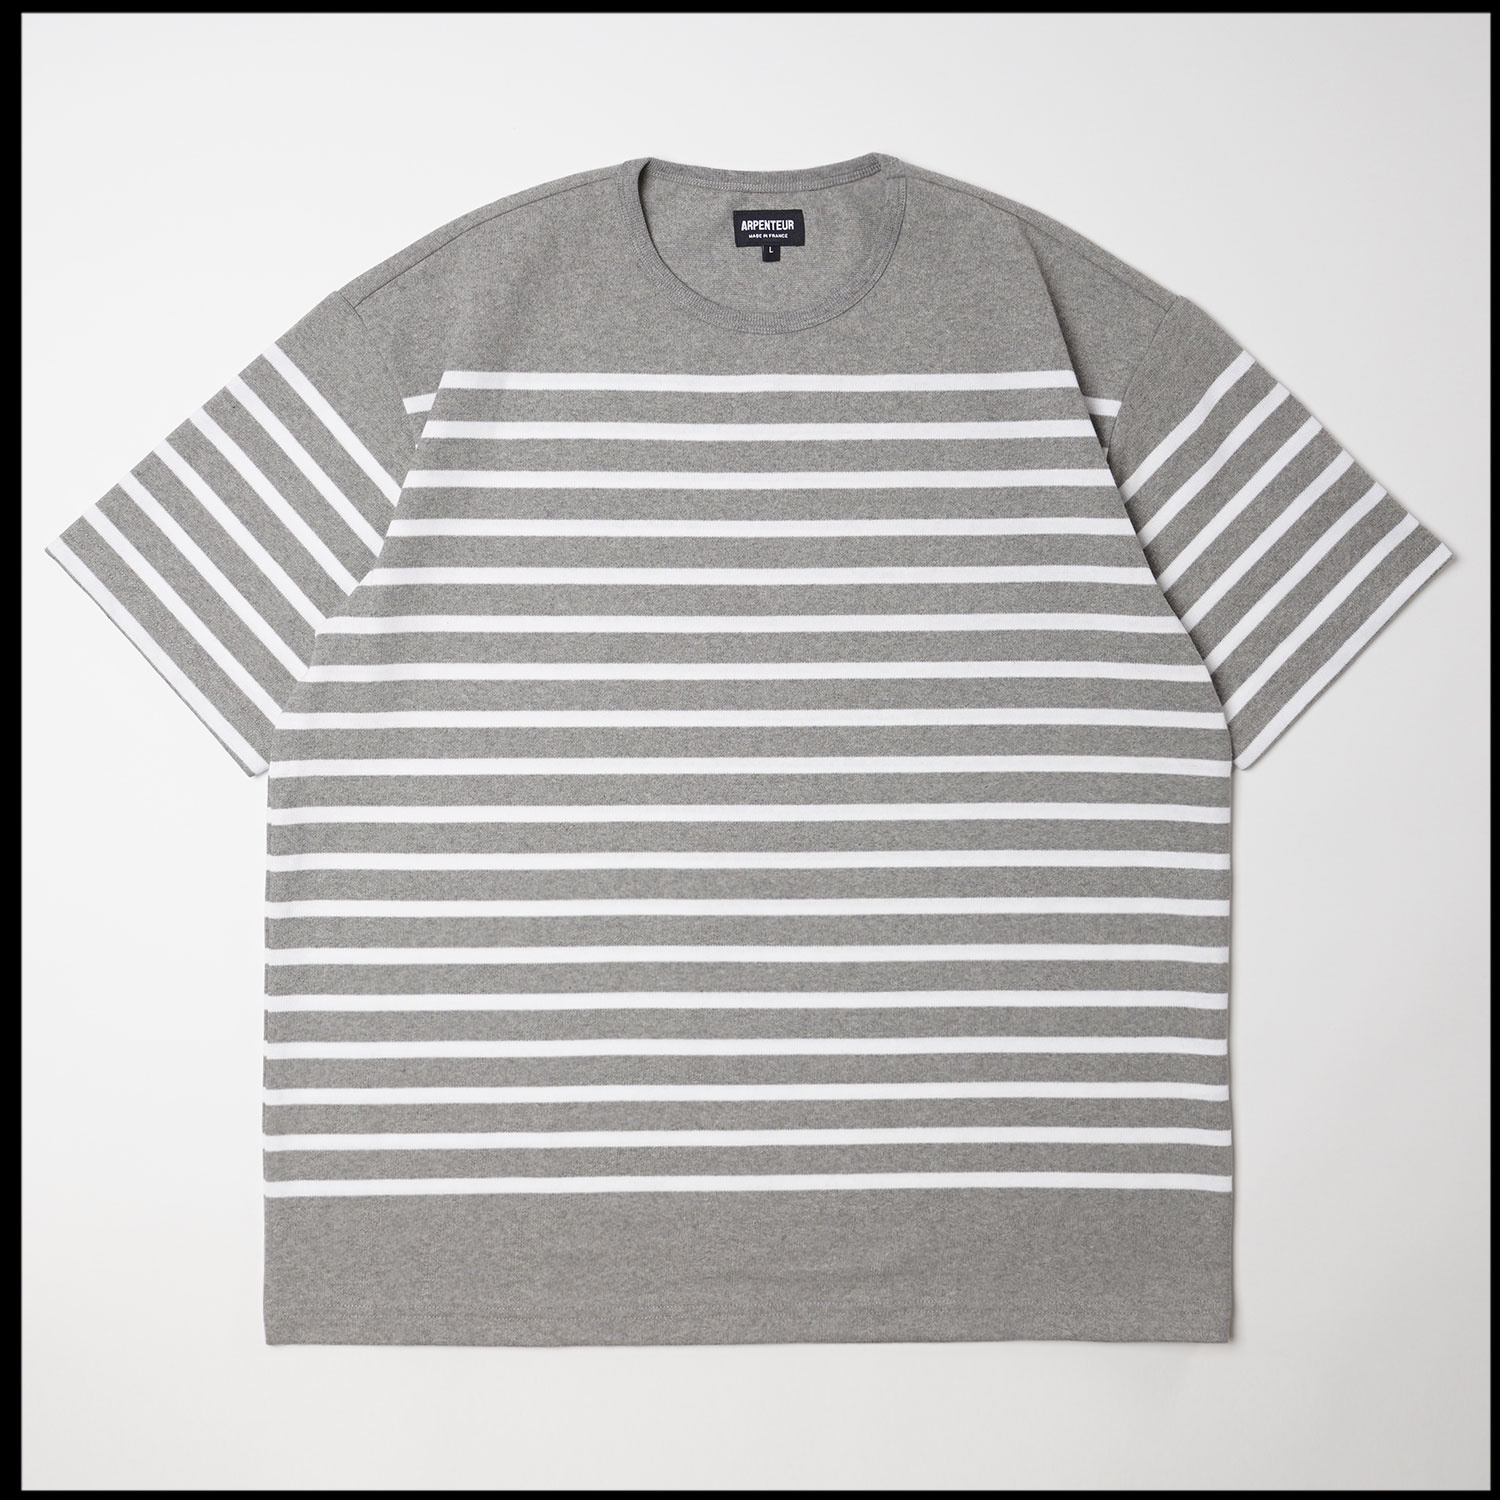 RACHEL t-shirt in Grey White color by Arpenteur